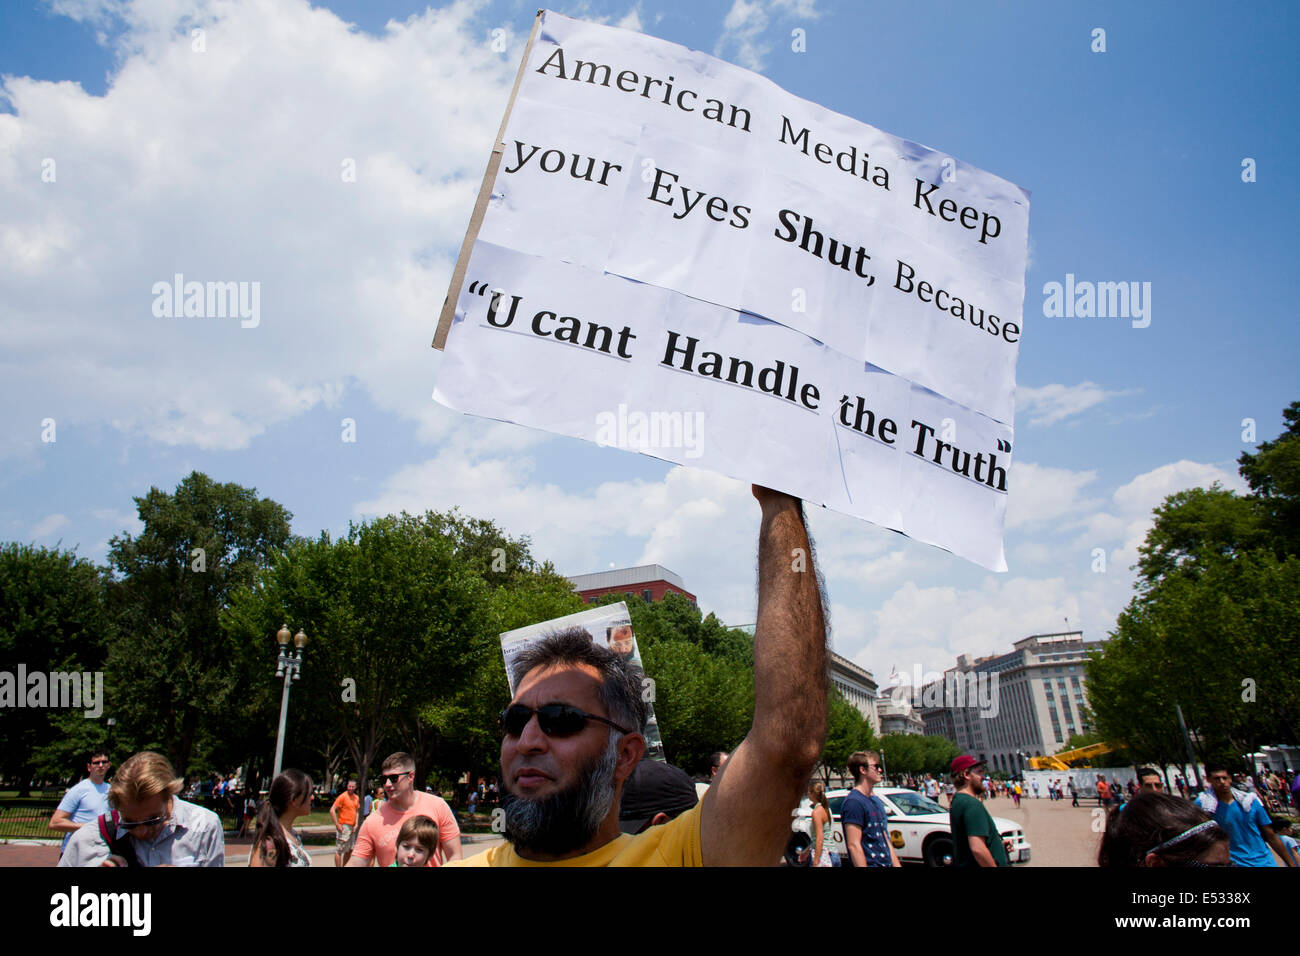 Man holding sign expressing criticism against American media - Washington, DC USA Stock Photo